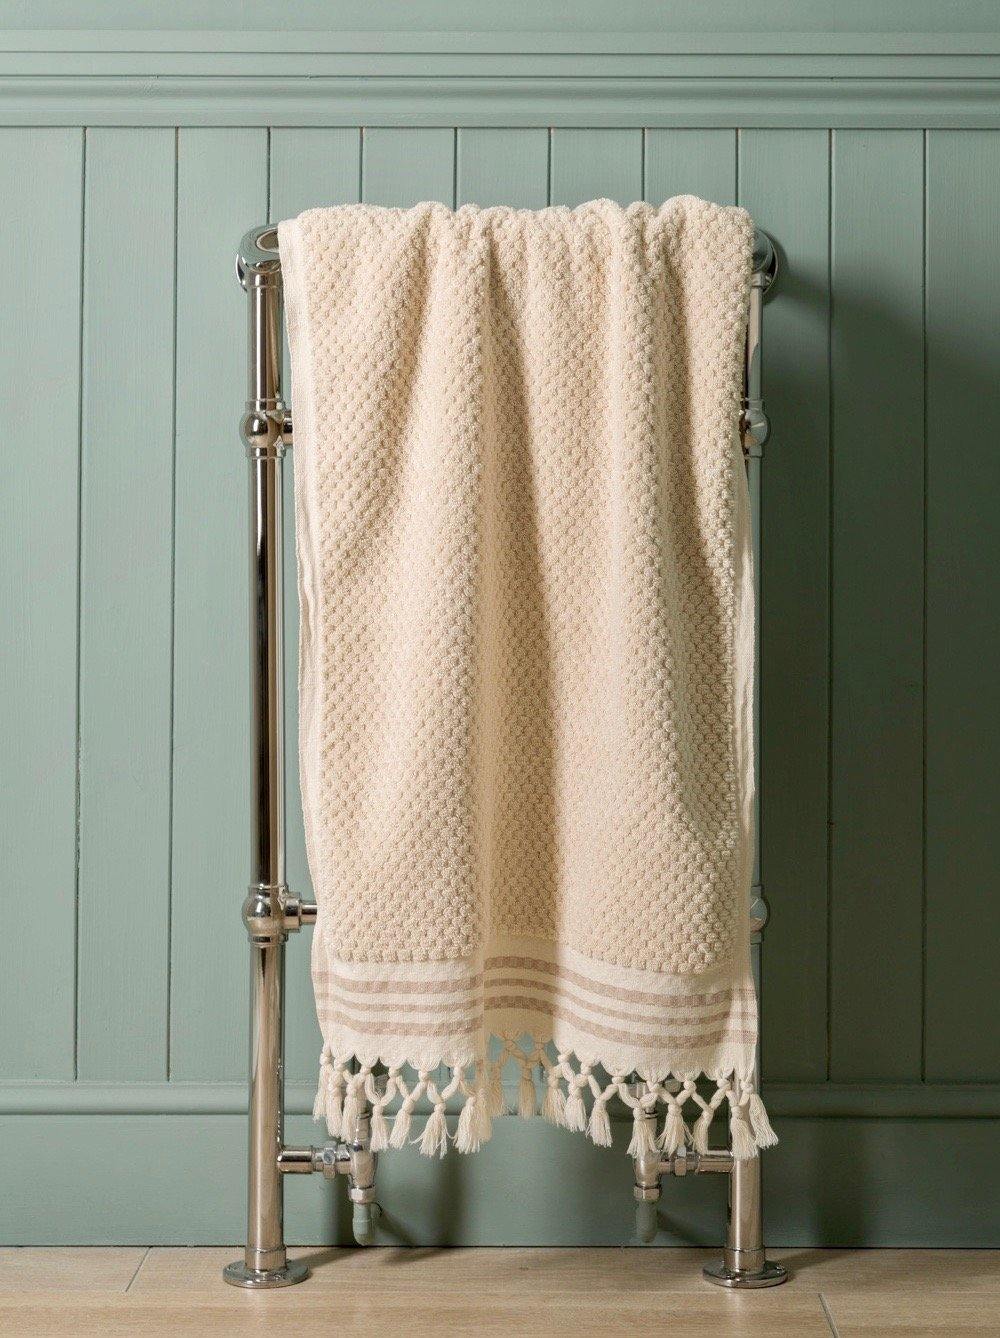 Classic Square - Ecru Organic Cotton Towel Collection